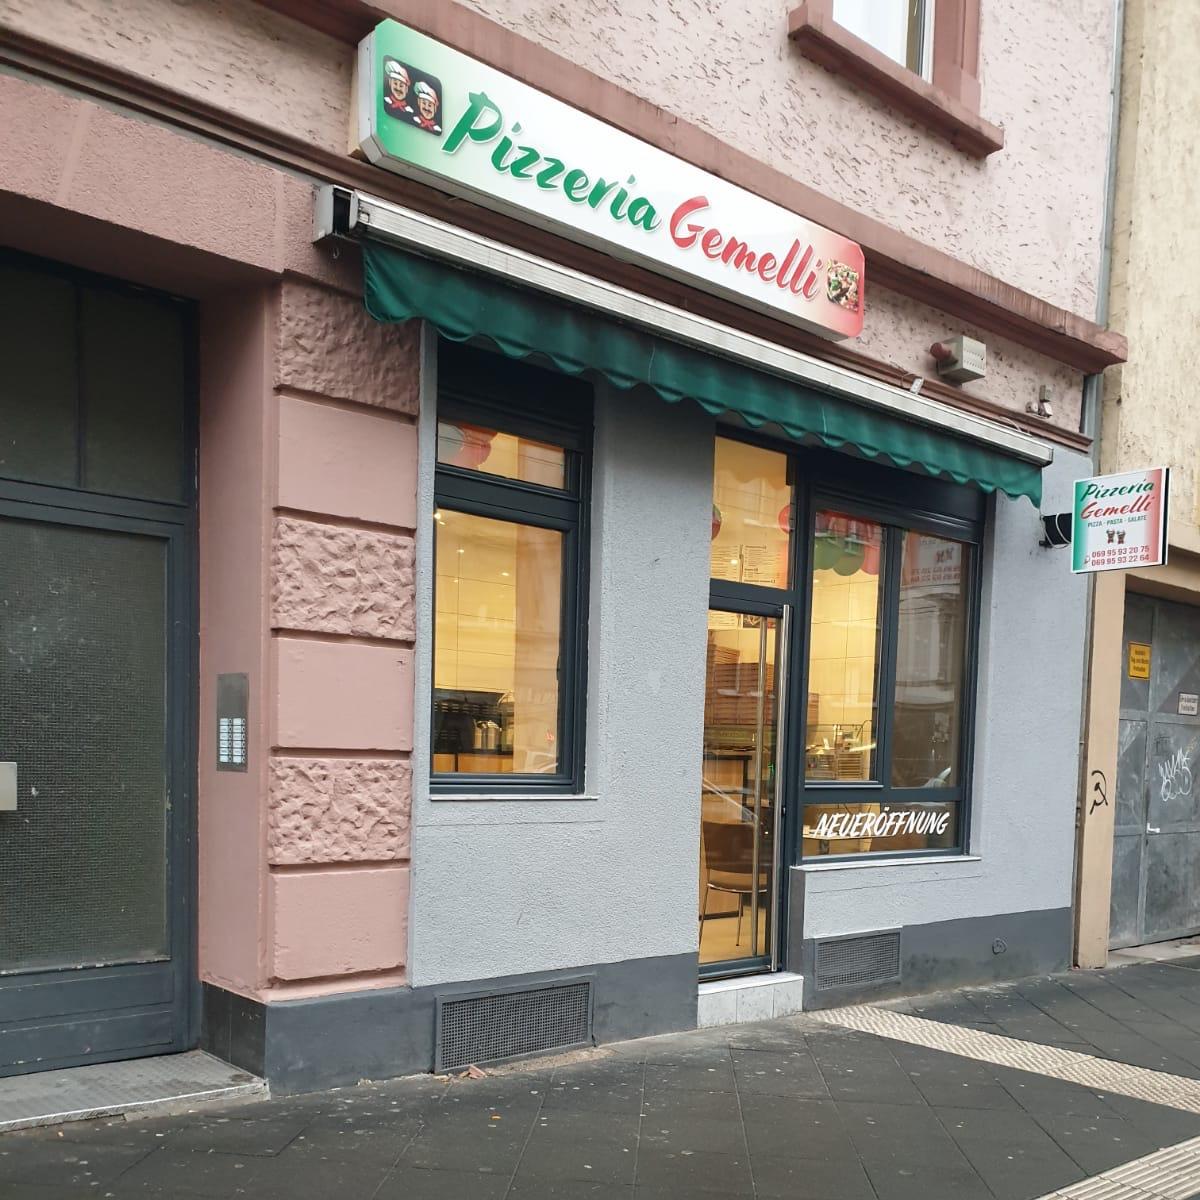 Restaurant "Pizzeria Gemelli" in Frankfurt am Main